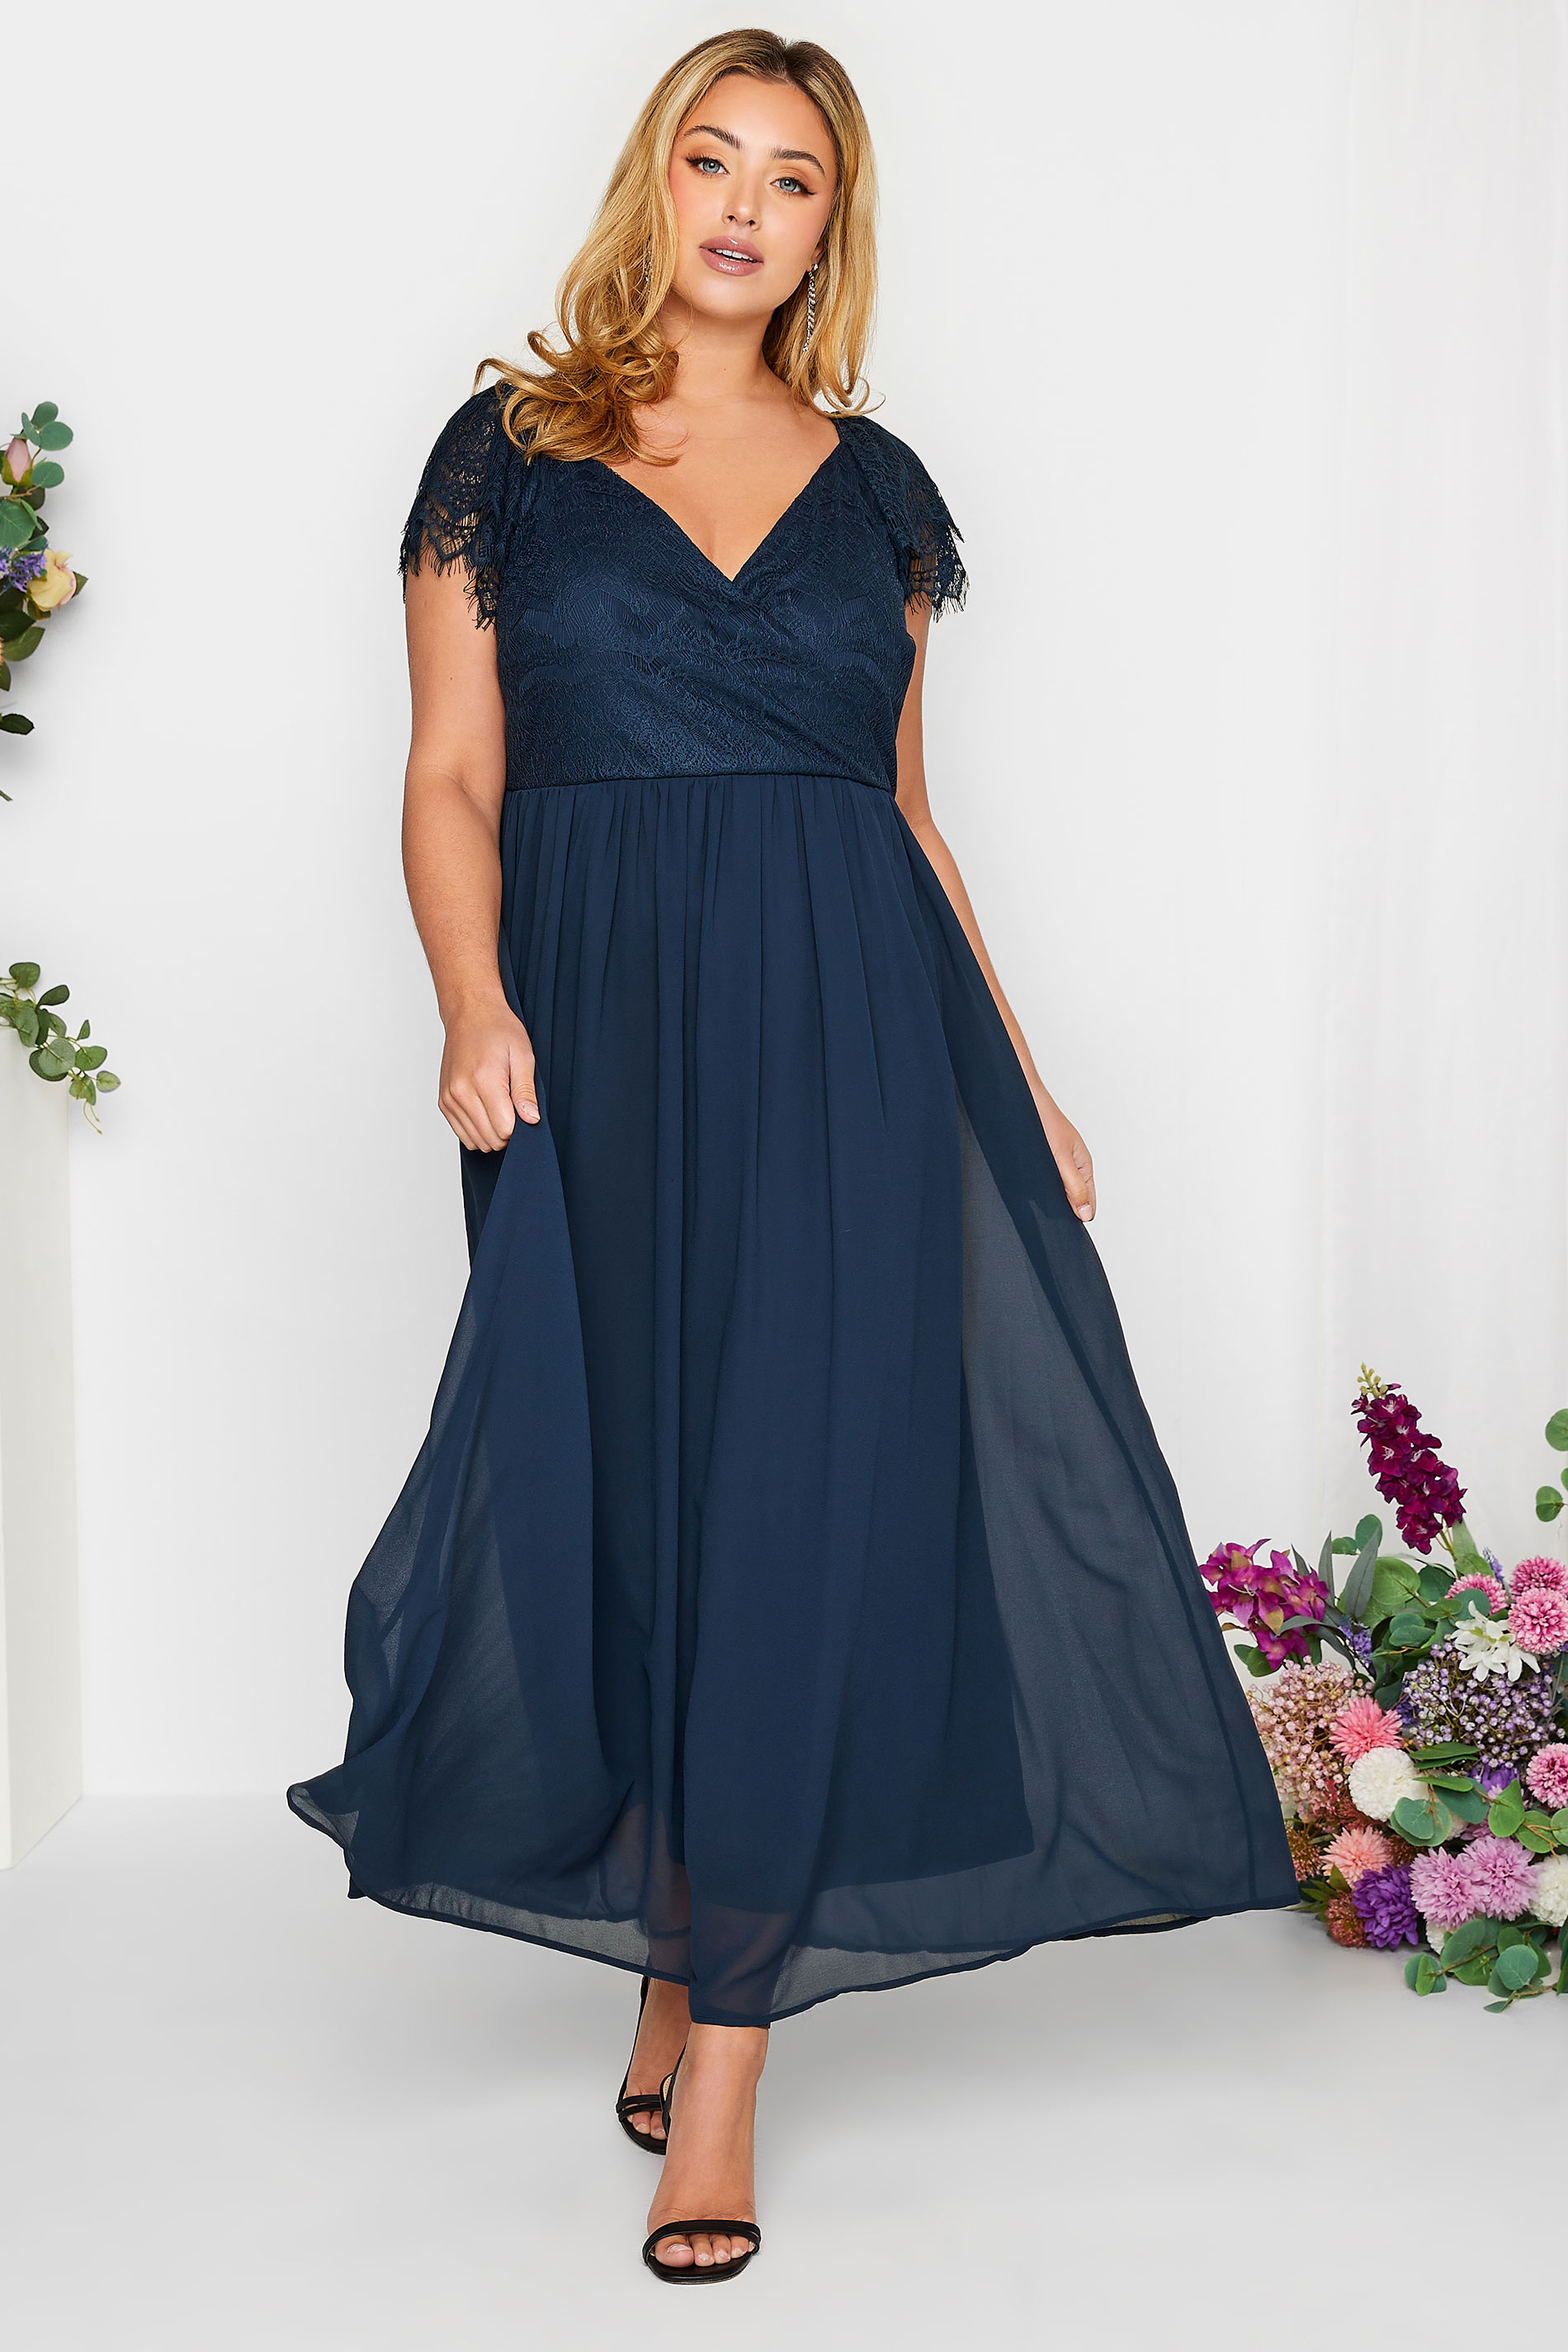 YOURS LONDON Plus Size Navy Blue Lace Detail Wrap Maxi Dress | Yours Clothing 1